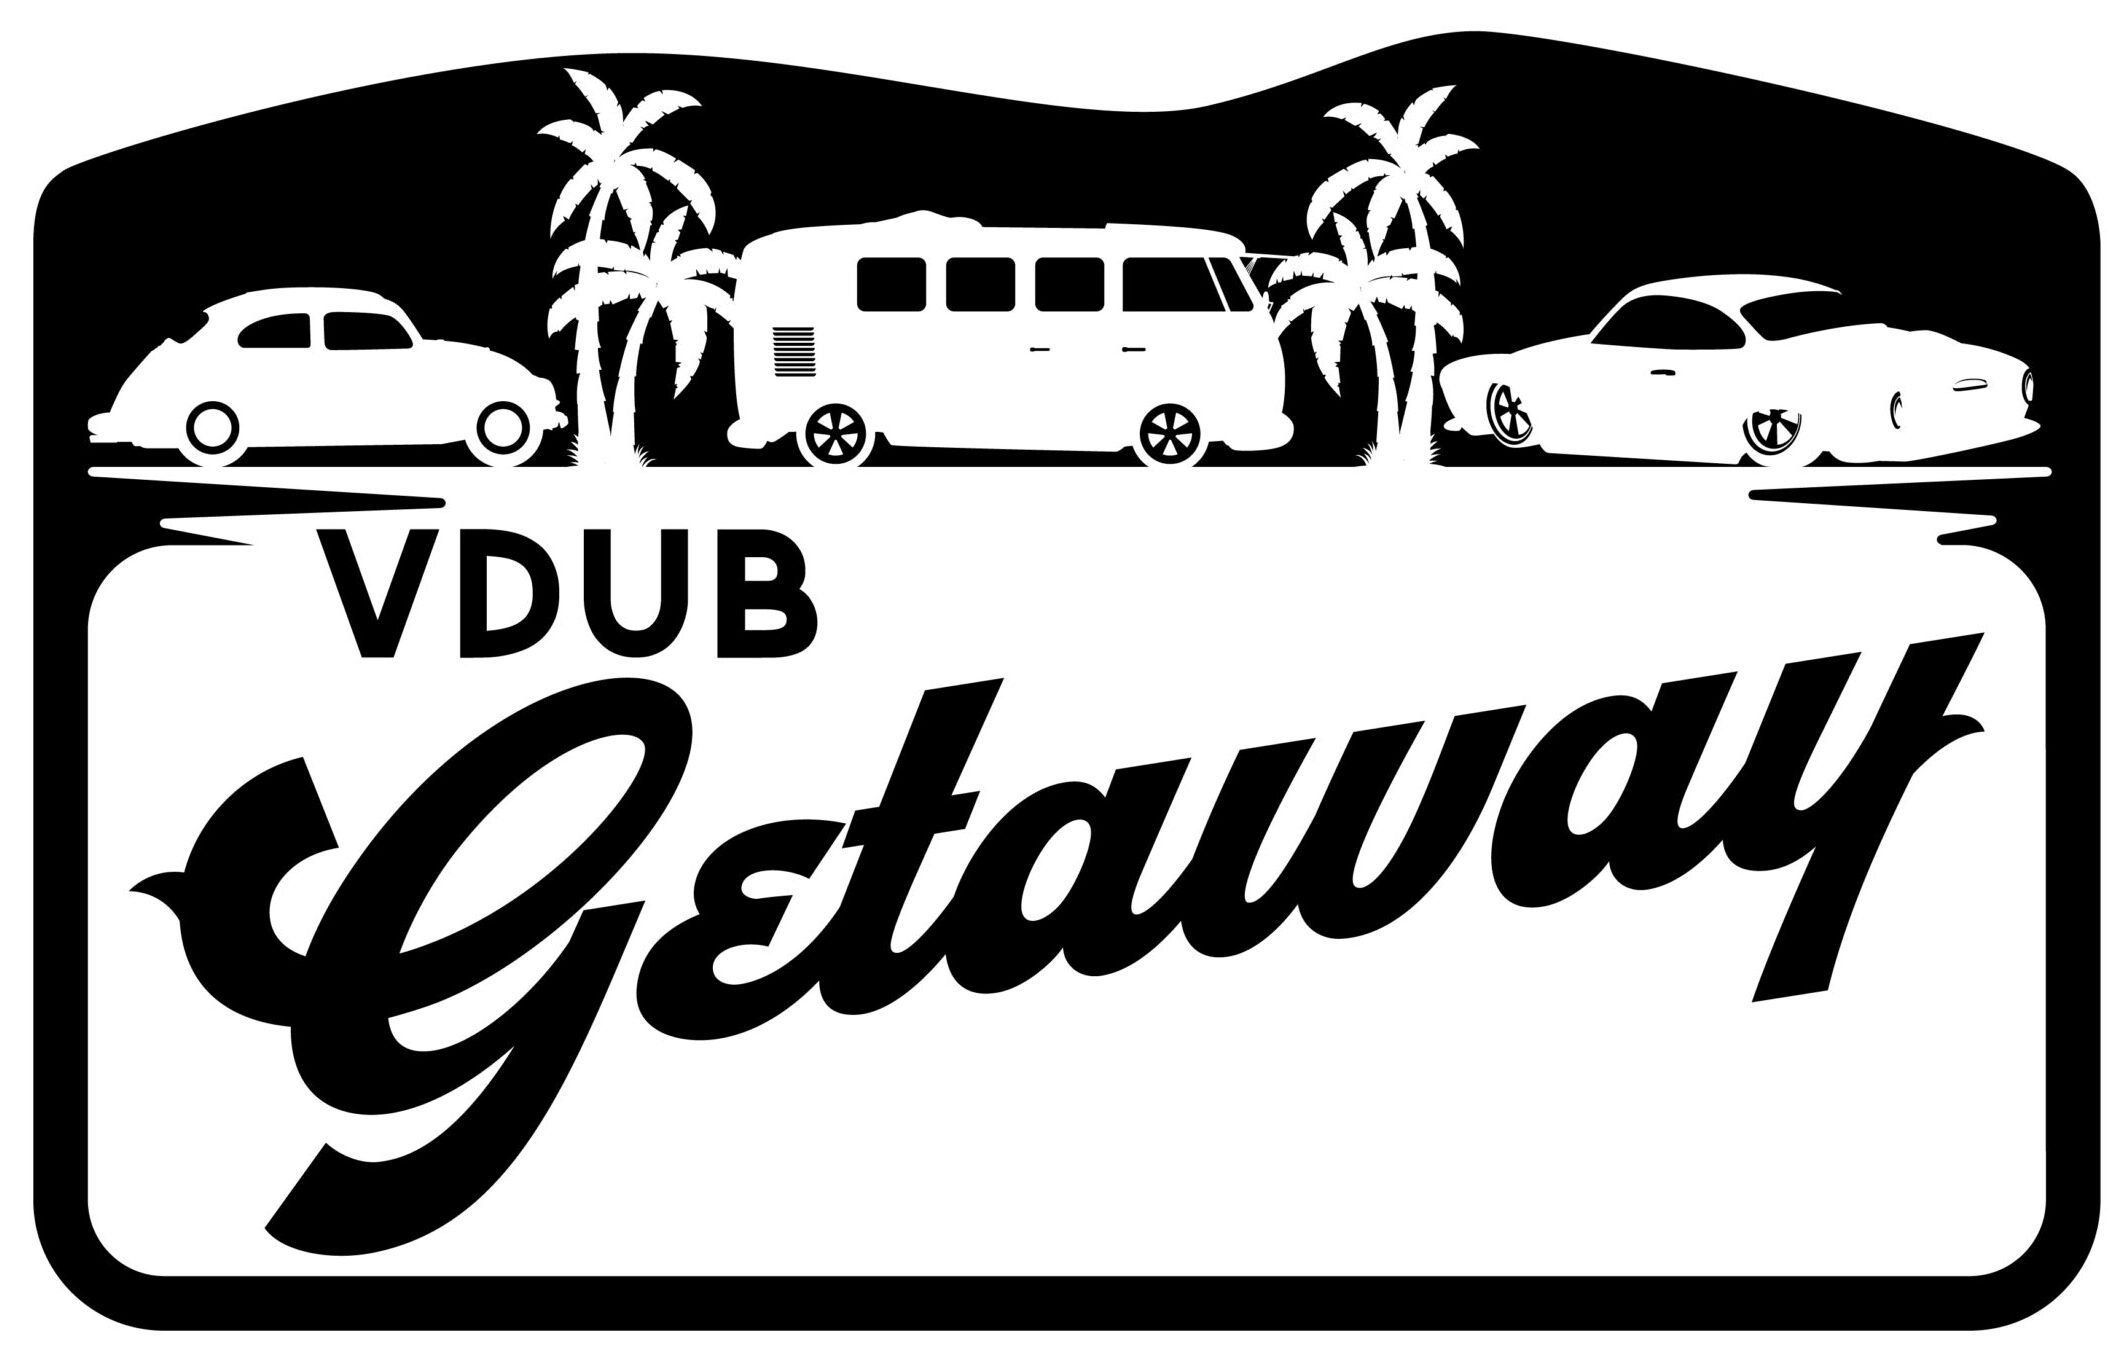 VDub Getaway